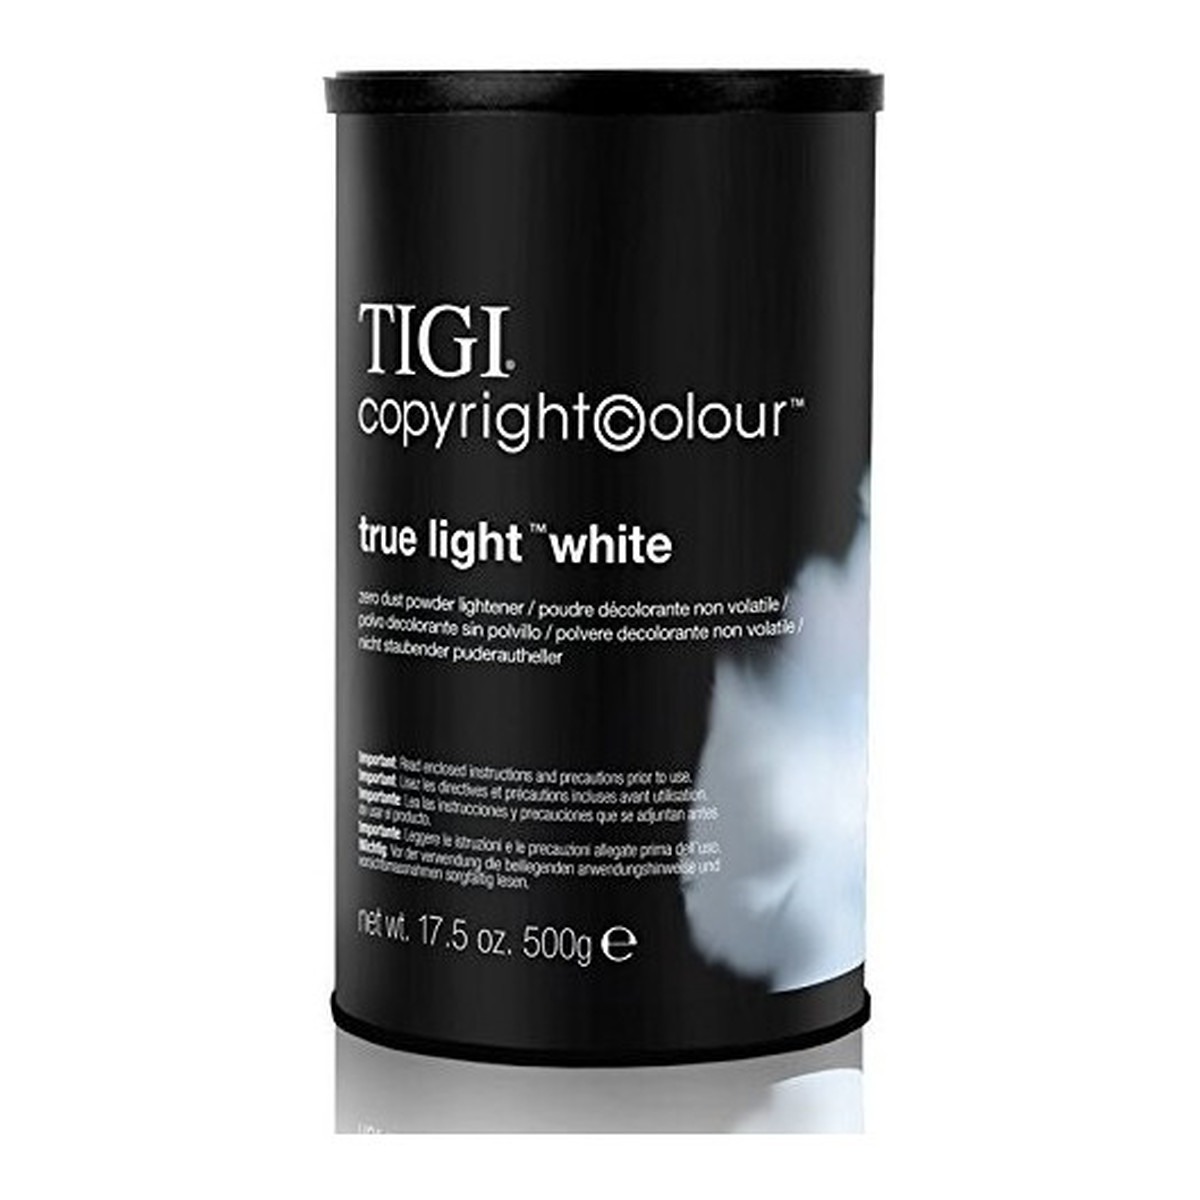 Tigi COPYRIGHT COLOUR TRUE LIGHT Rozjaśniacz do włosów WHITE/BLANC 500g